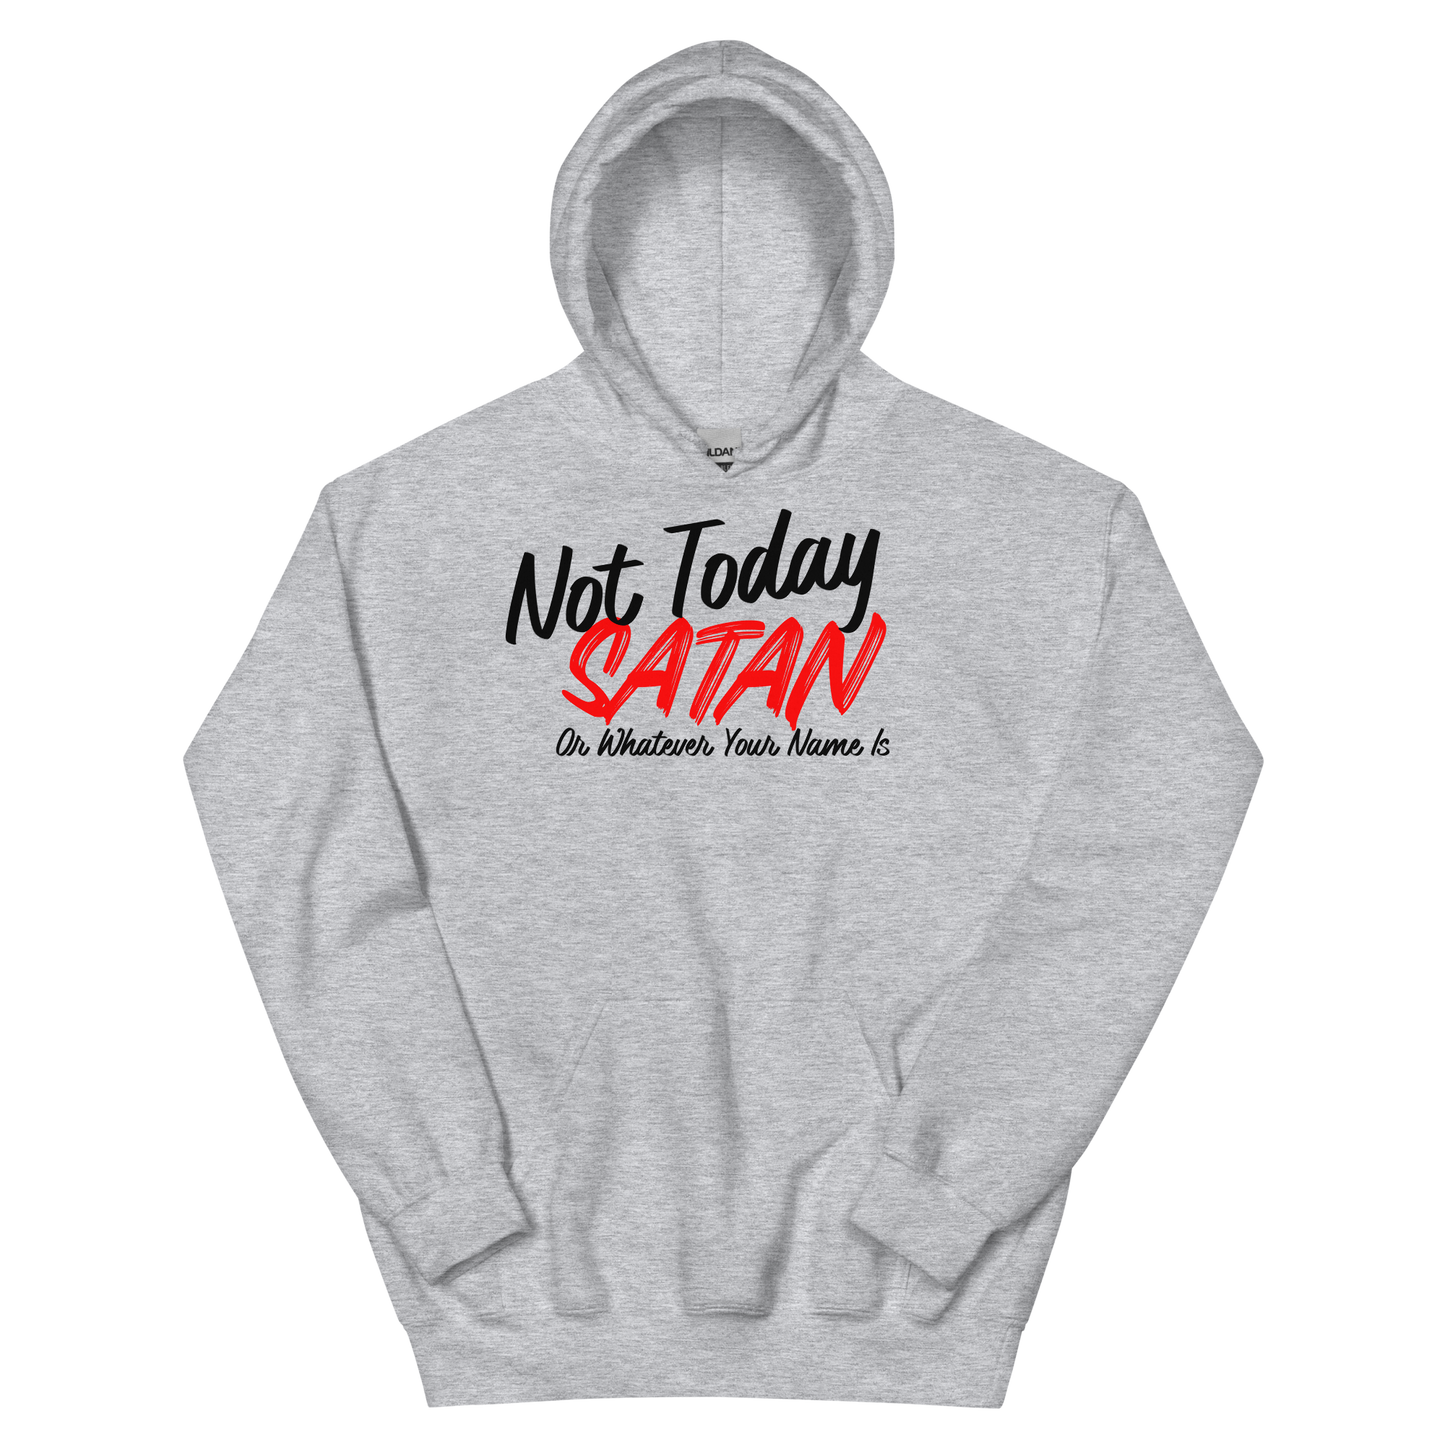 Not Today Satan Hoodie